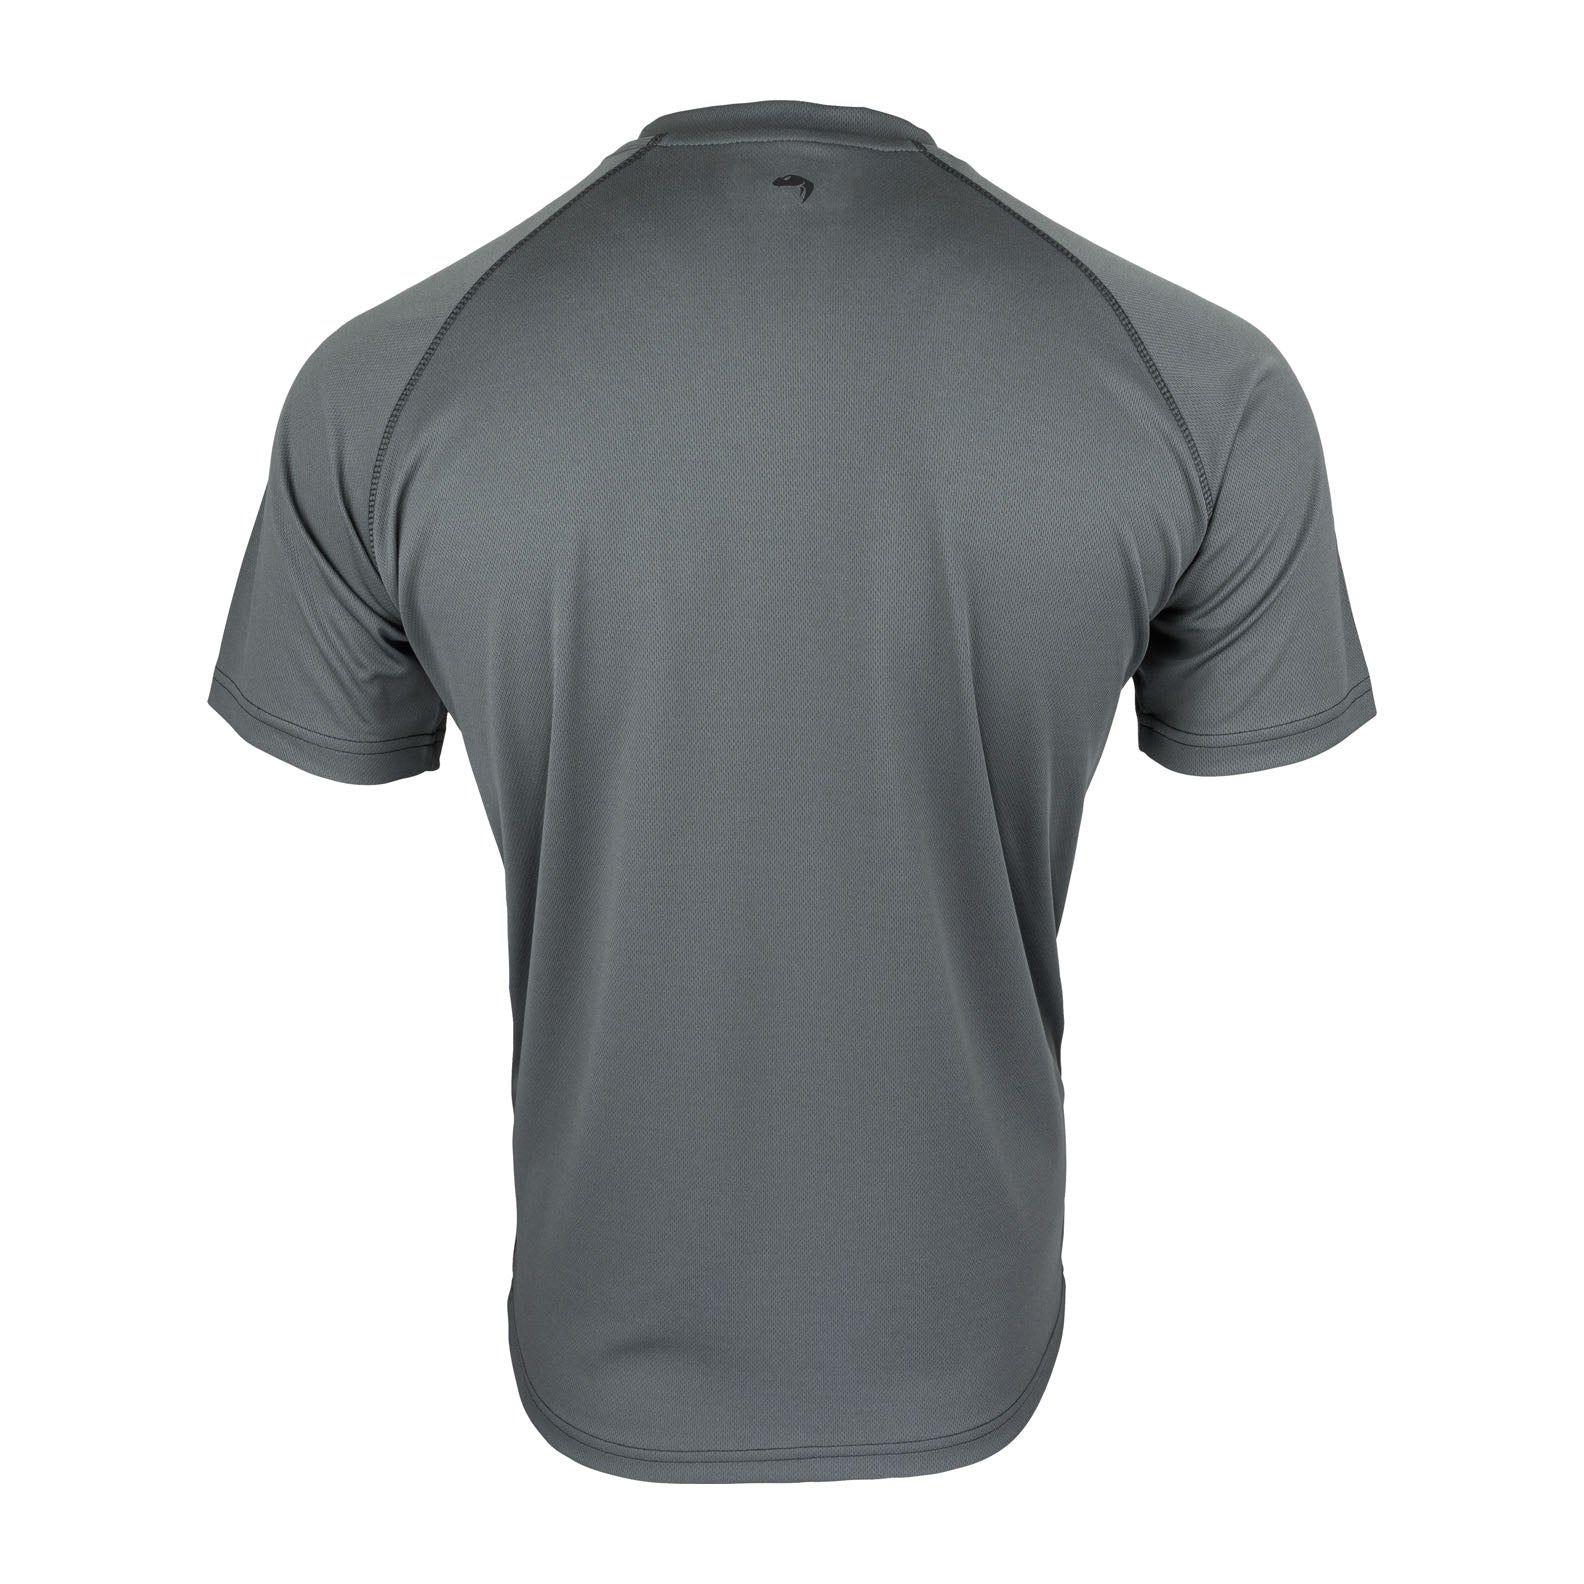 Viper Mesh-Tech T-Shirt